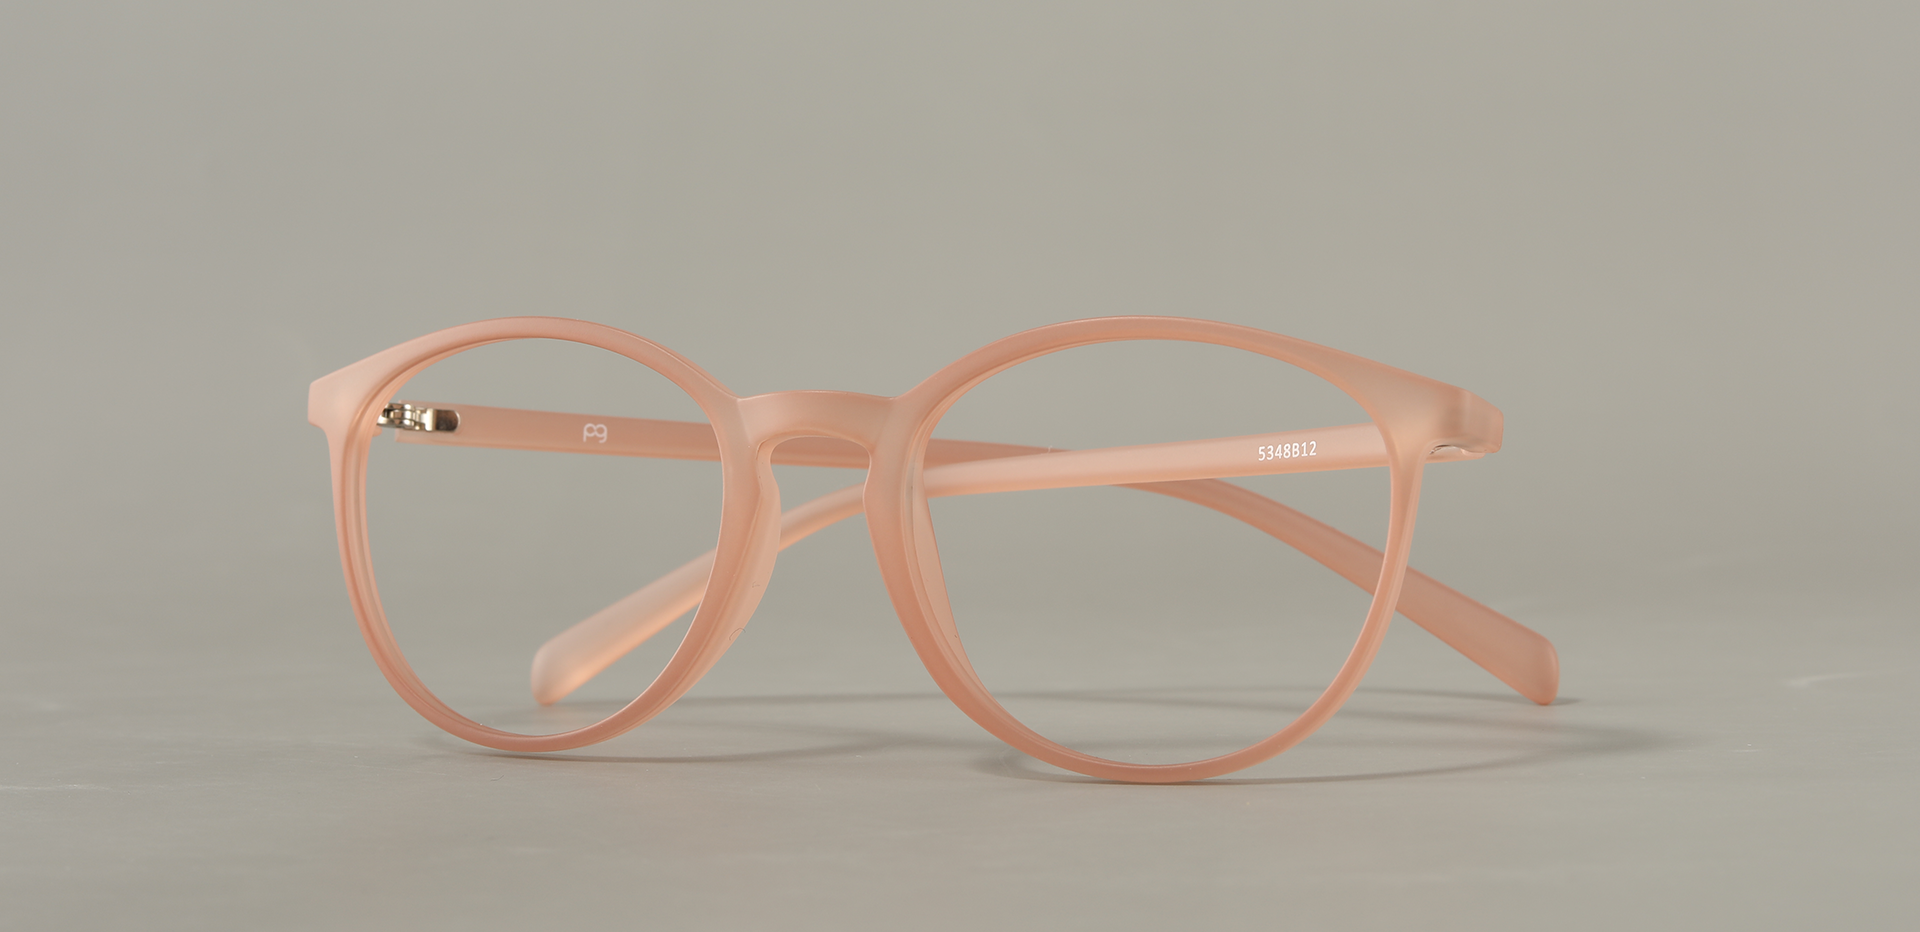 Santoro Round Prescription Glasses - Pink